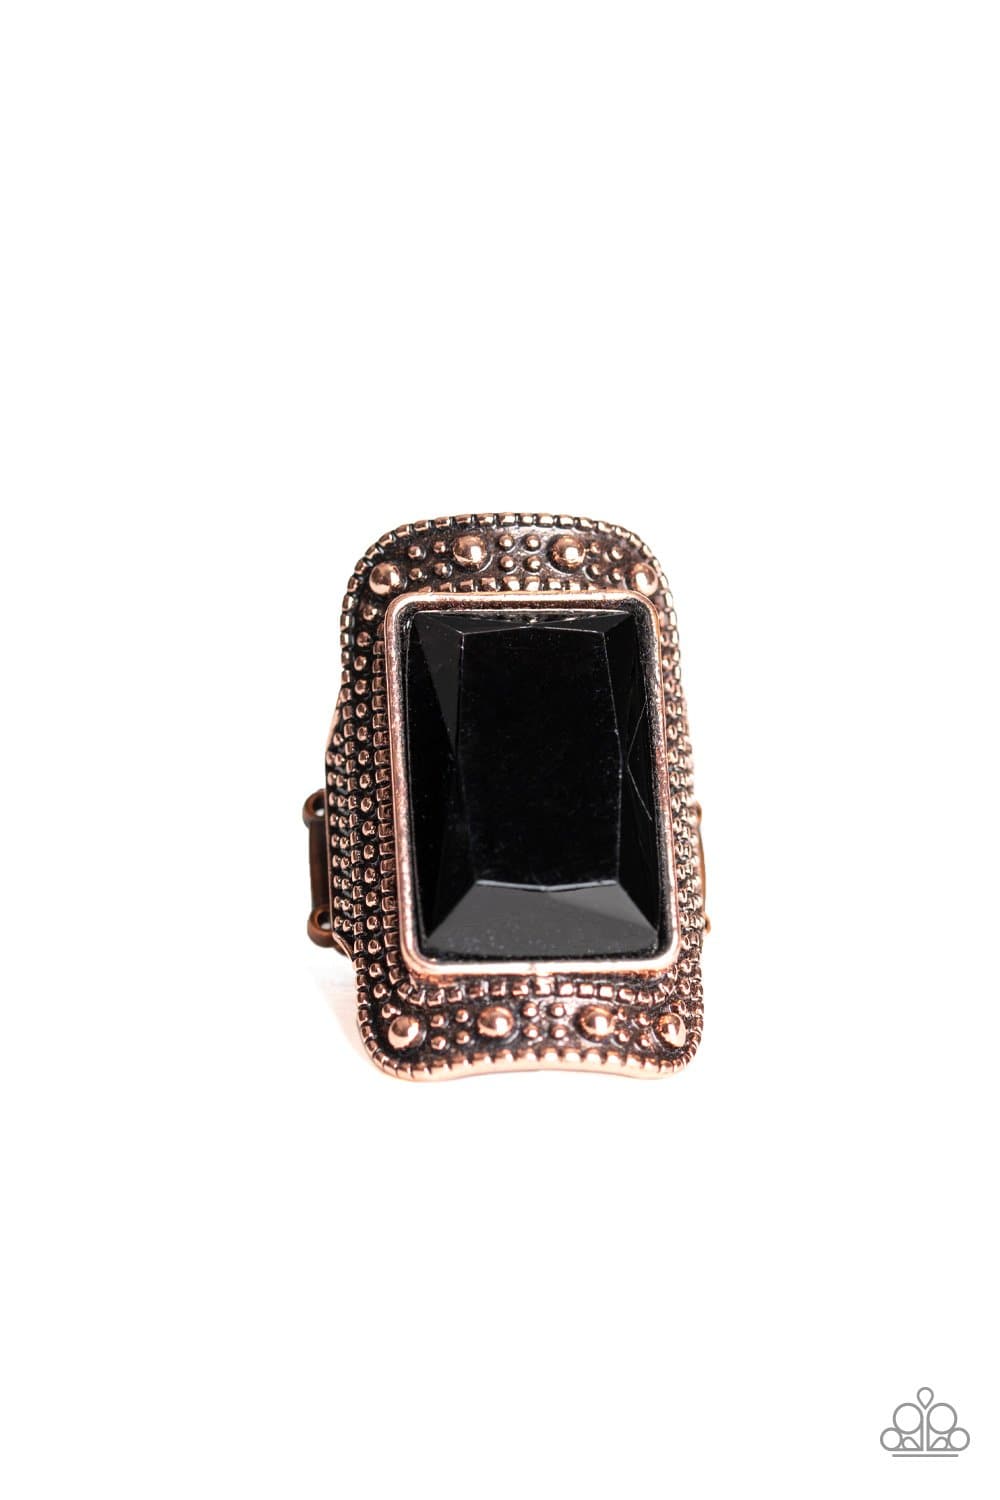 Very HEIR-descent - Copper & Black Ring - Paparazzi Accessories - GlaMarous Titi Jewels